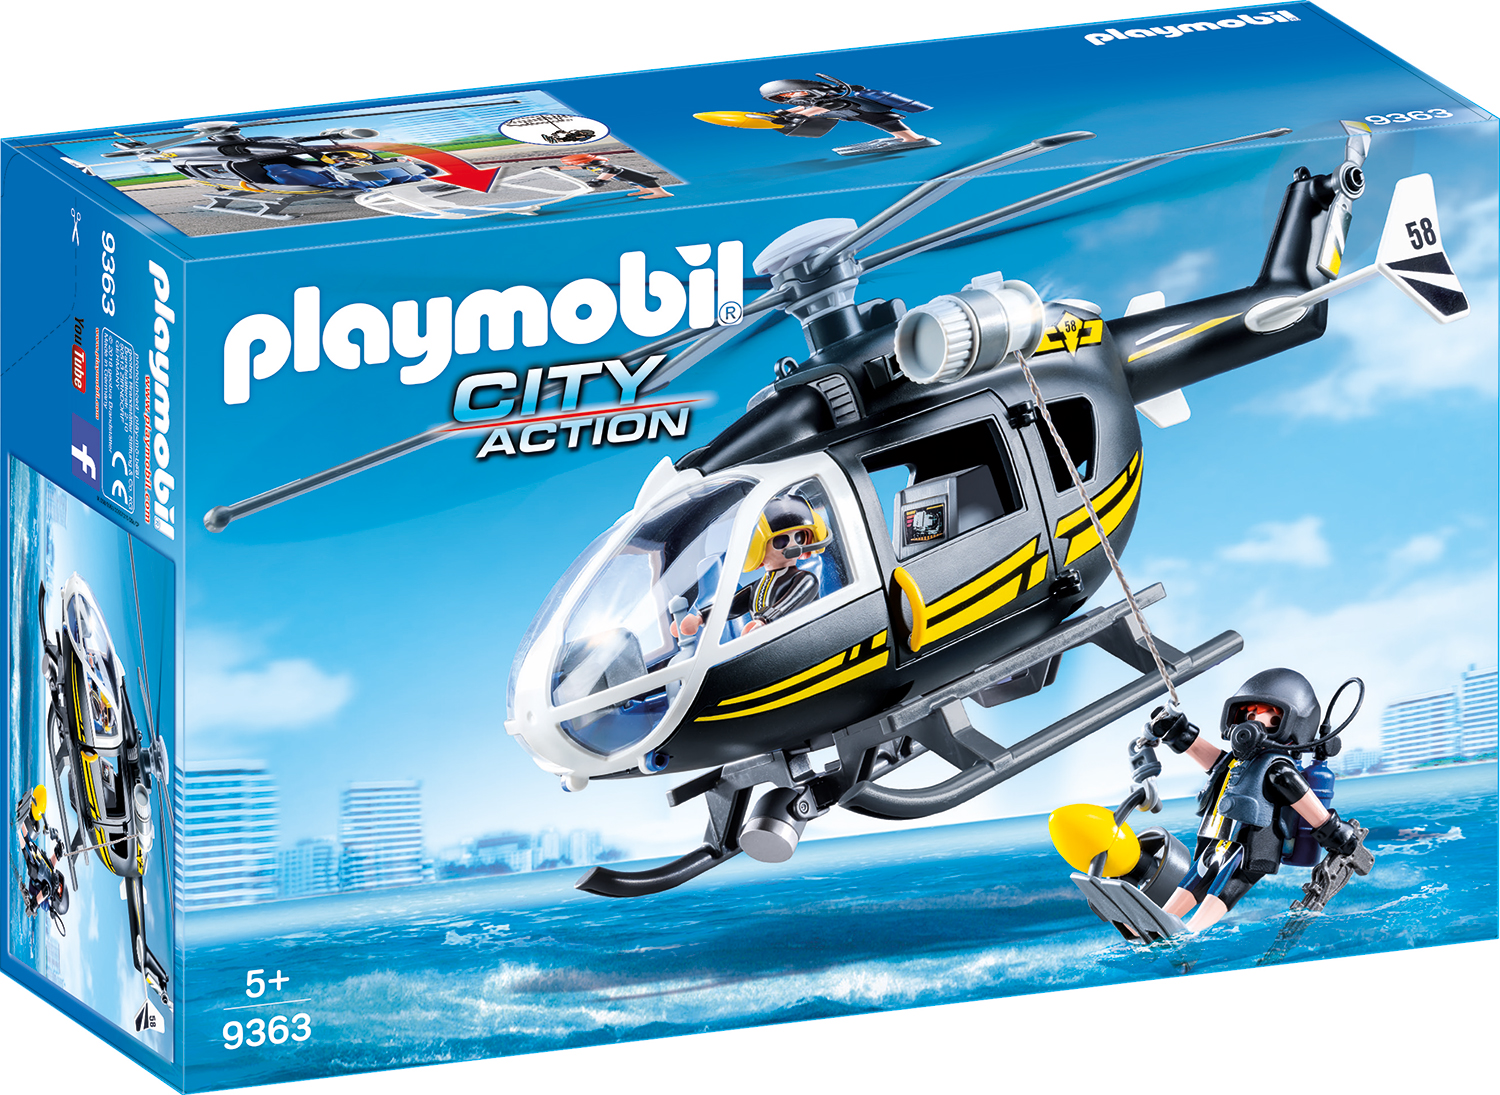 Elicopterul echipei swat playmobil city action